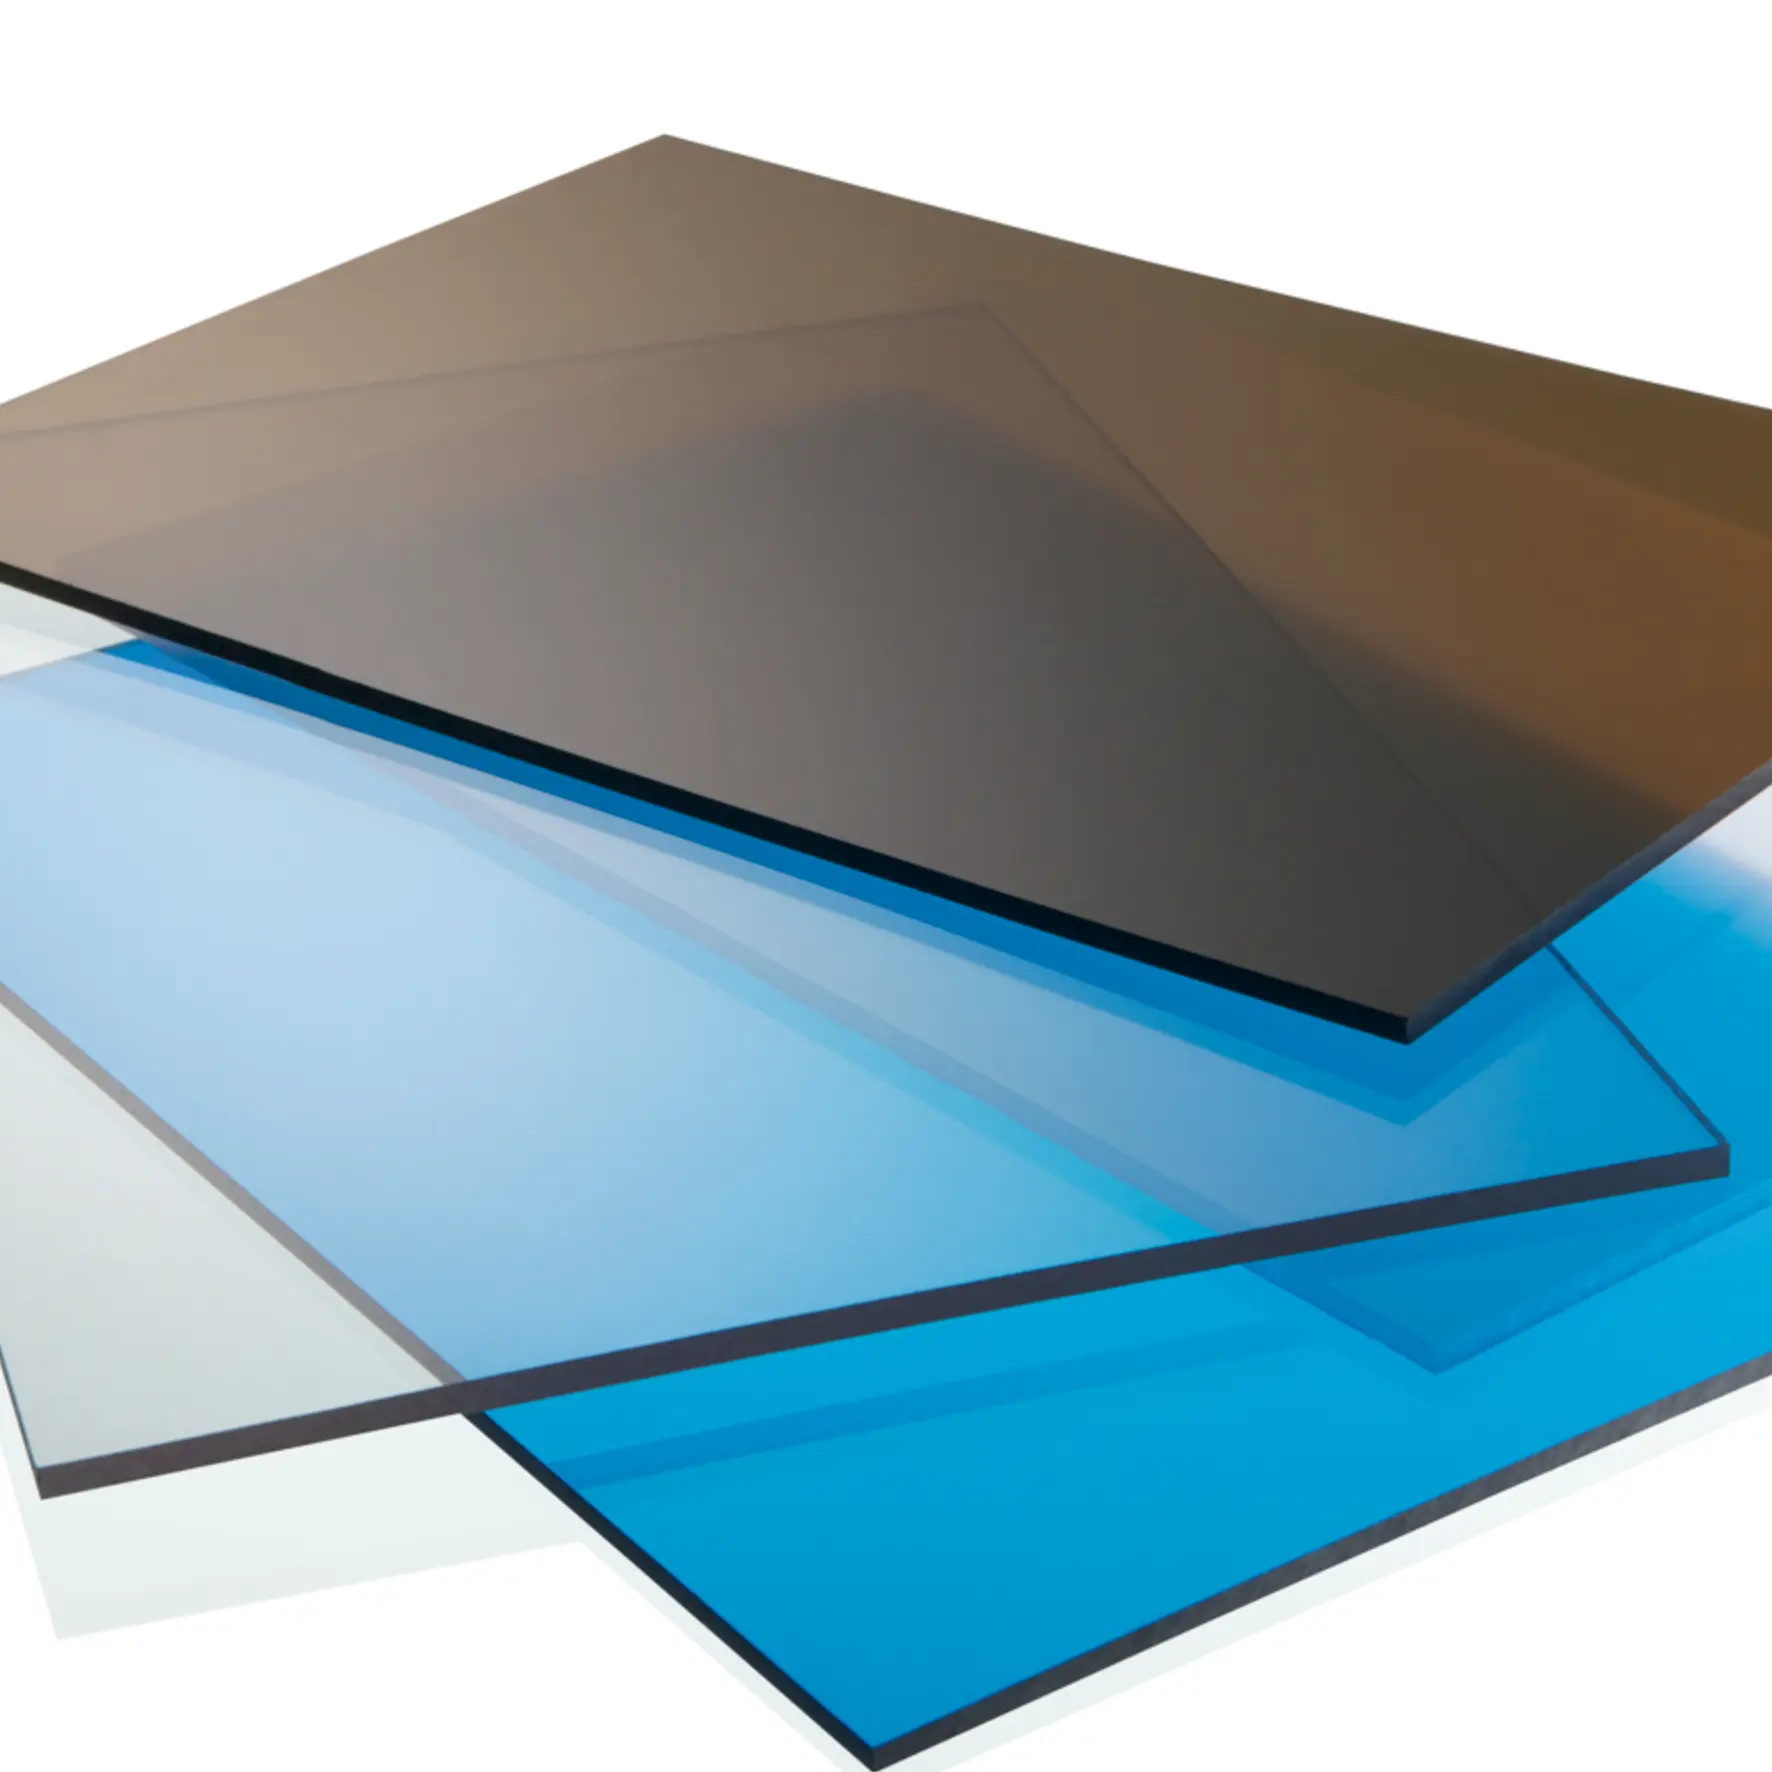 Colored apet petg sheet instead of polycarbonate safe insulation sheet Since 2000